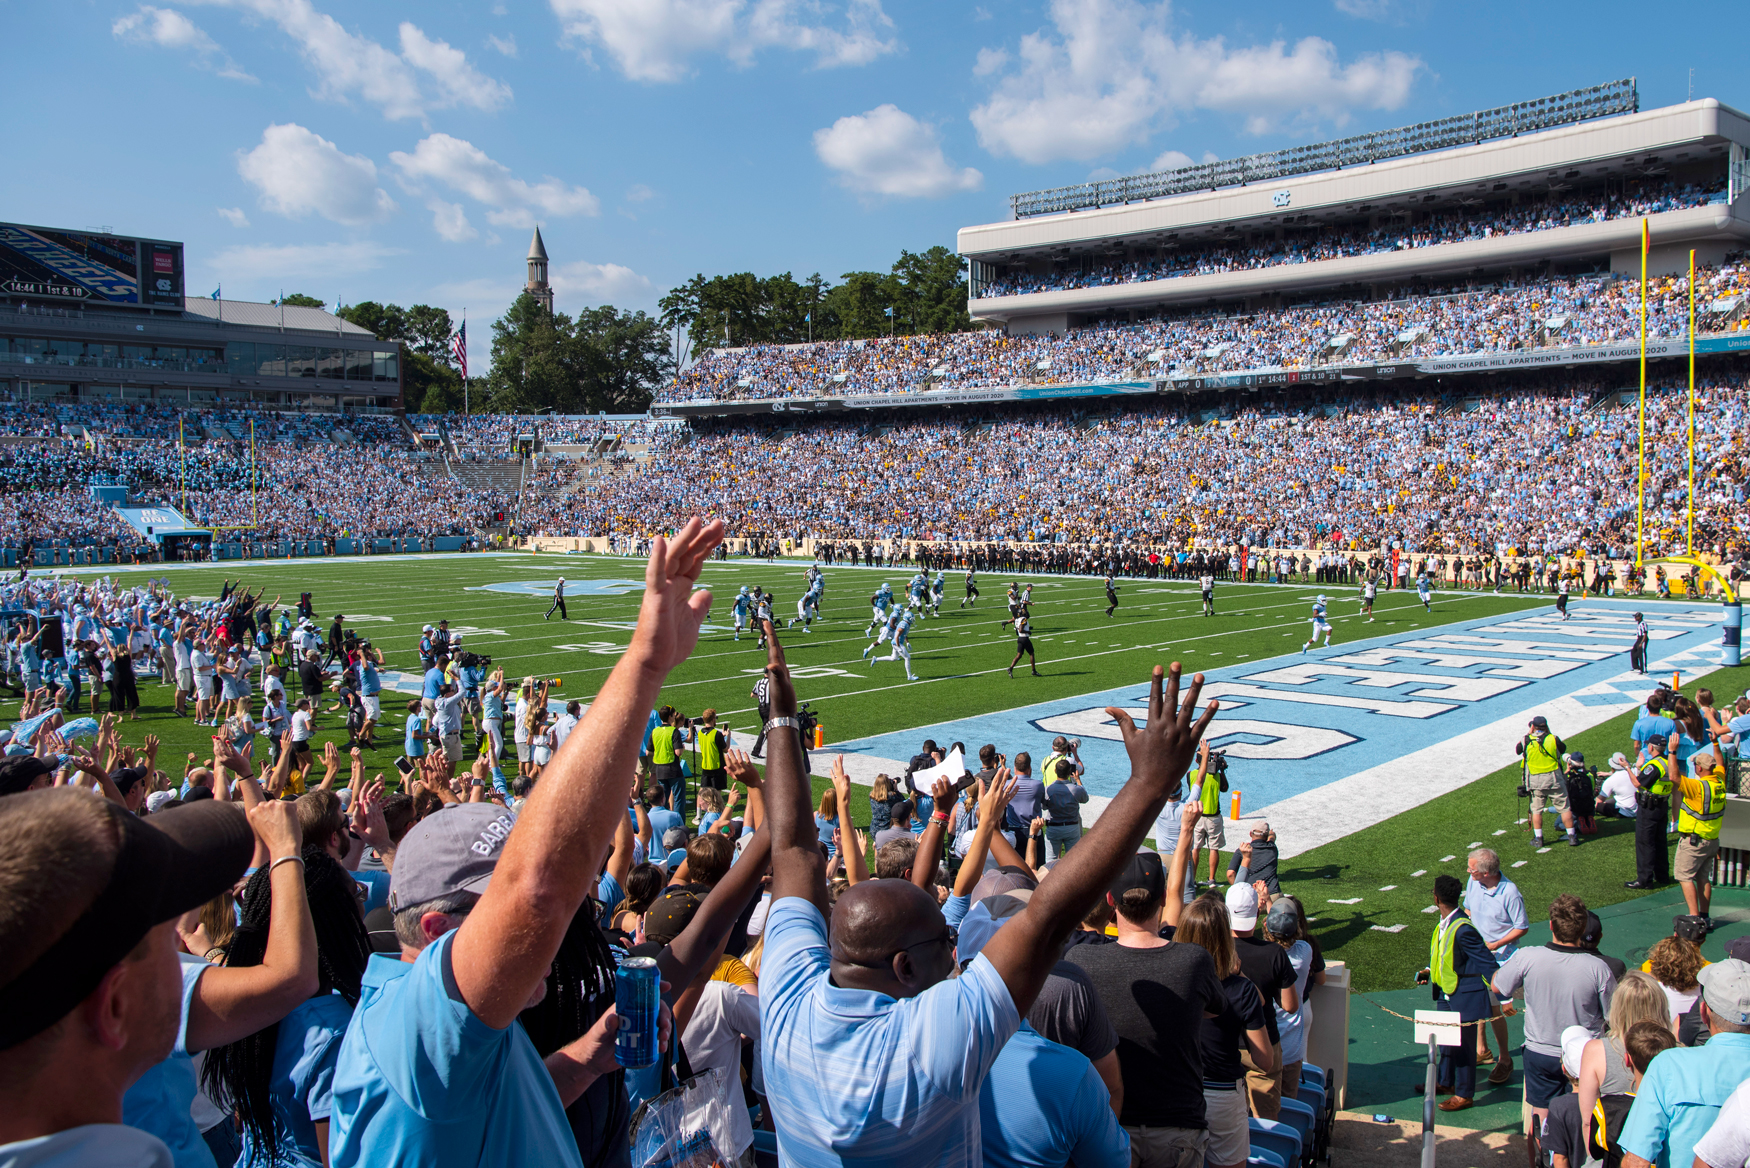 The crowd cheers at a football game at The University of North Carolina at Chapel Hill